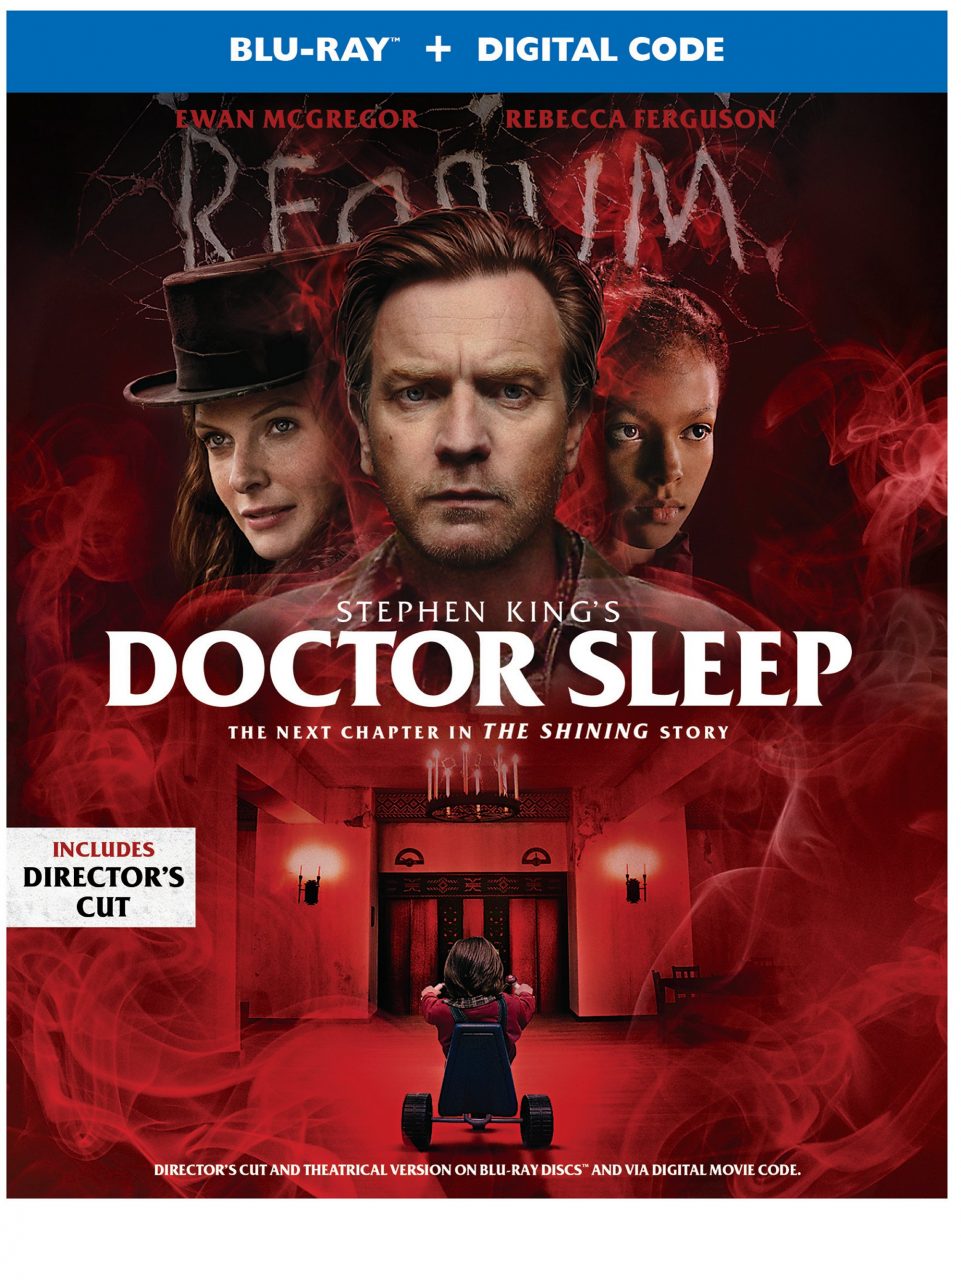 Stephen King's Doctor Sleep Blu-Ray Combo Pack cover (Warner Bros. Home Entertainment)